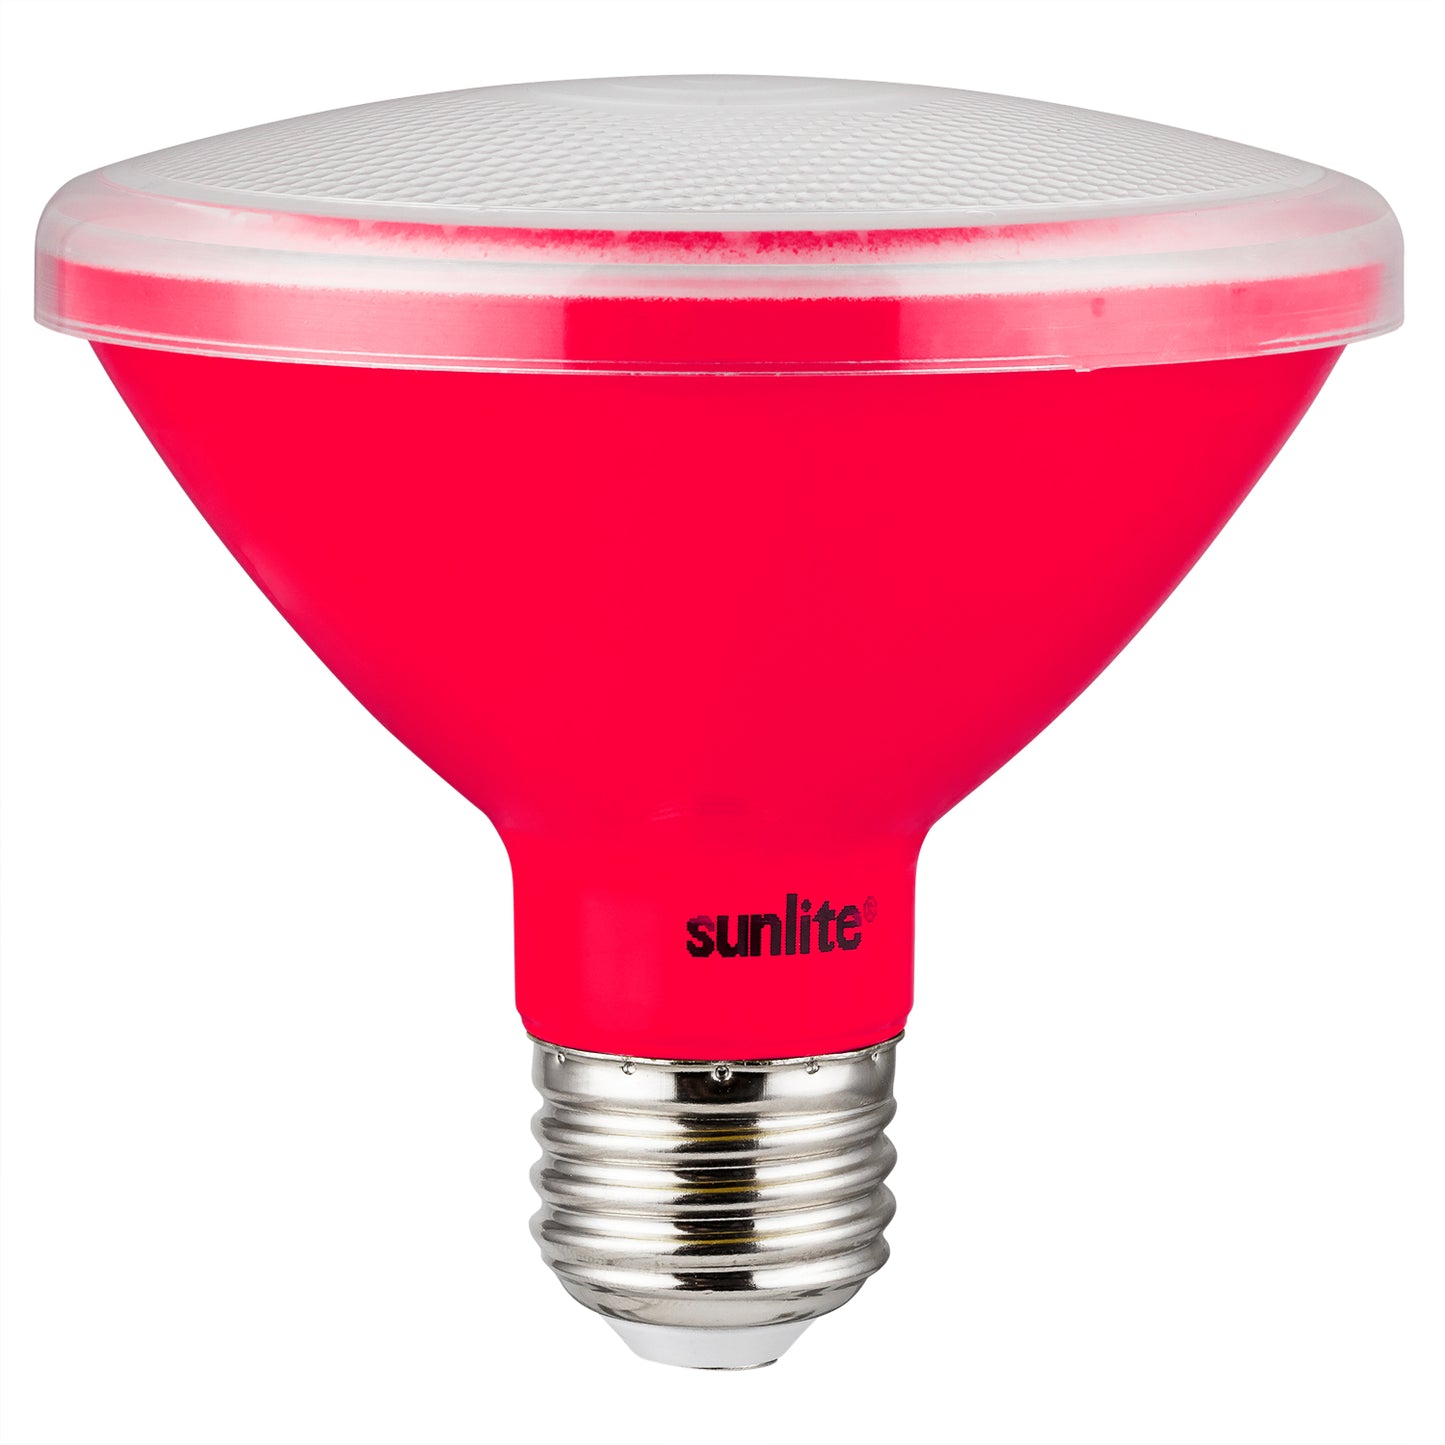 Sunlite LED PAR30 Short Neck Colored Recessed Light Bulb, 8 Watt (75W Equivalent), Medium (E26) Base, Floodlight, ETL Listed, Red, 1 Count